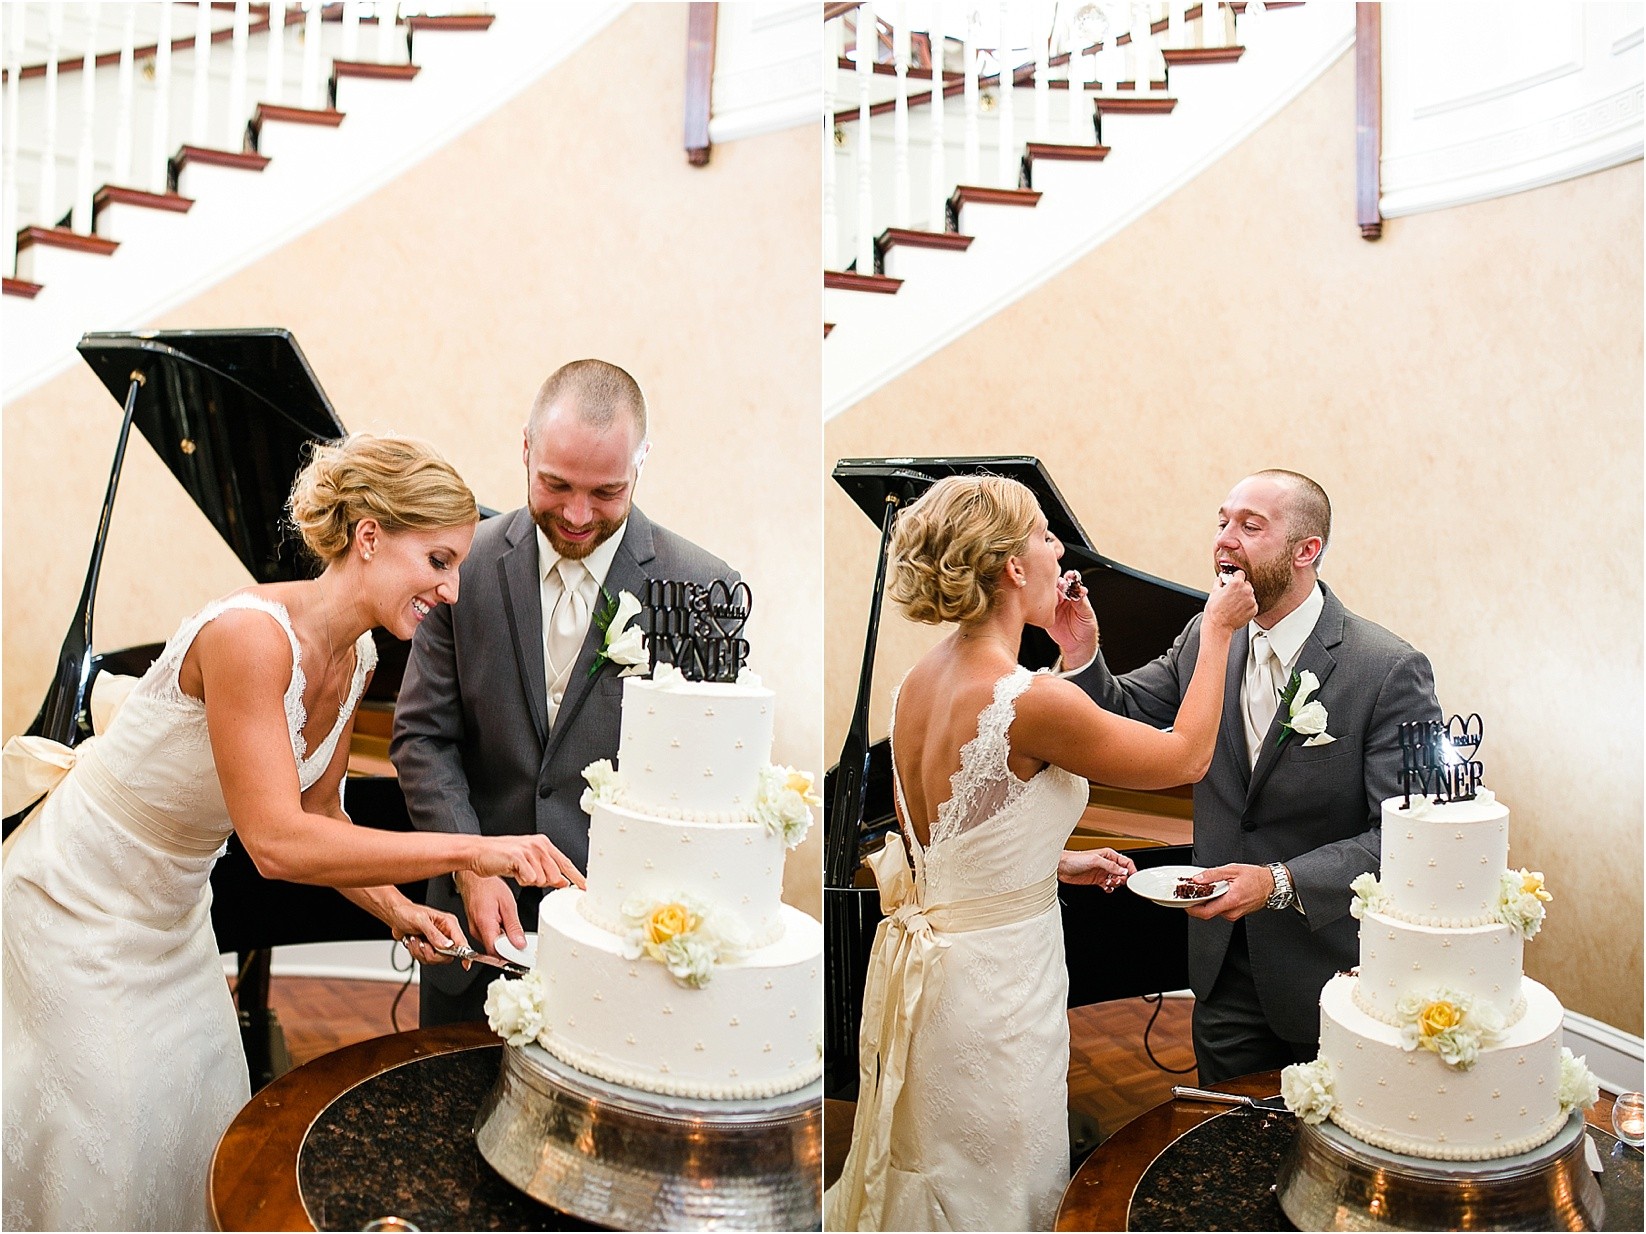 Cake cutting at the Charlotte City Club wedding in charlotte North Carolina